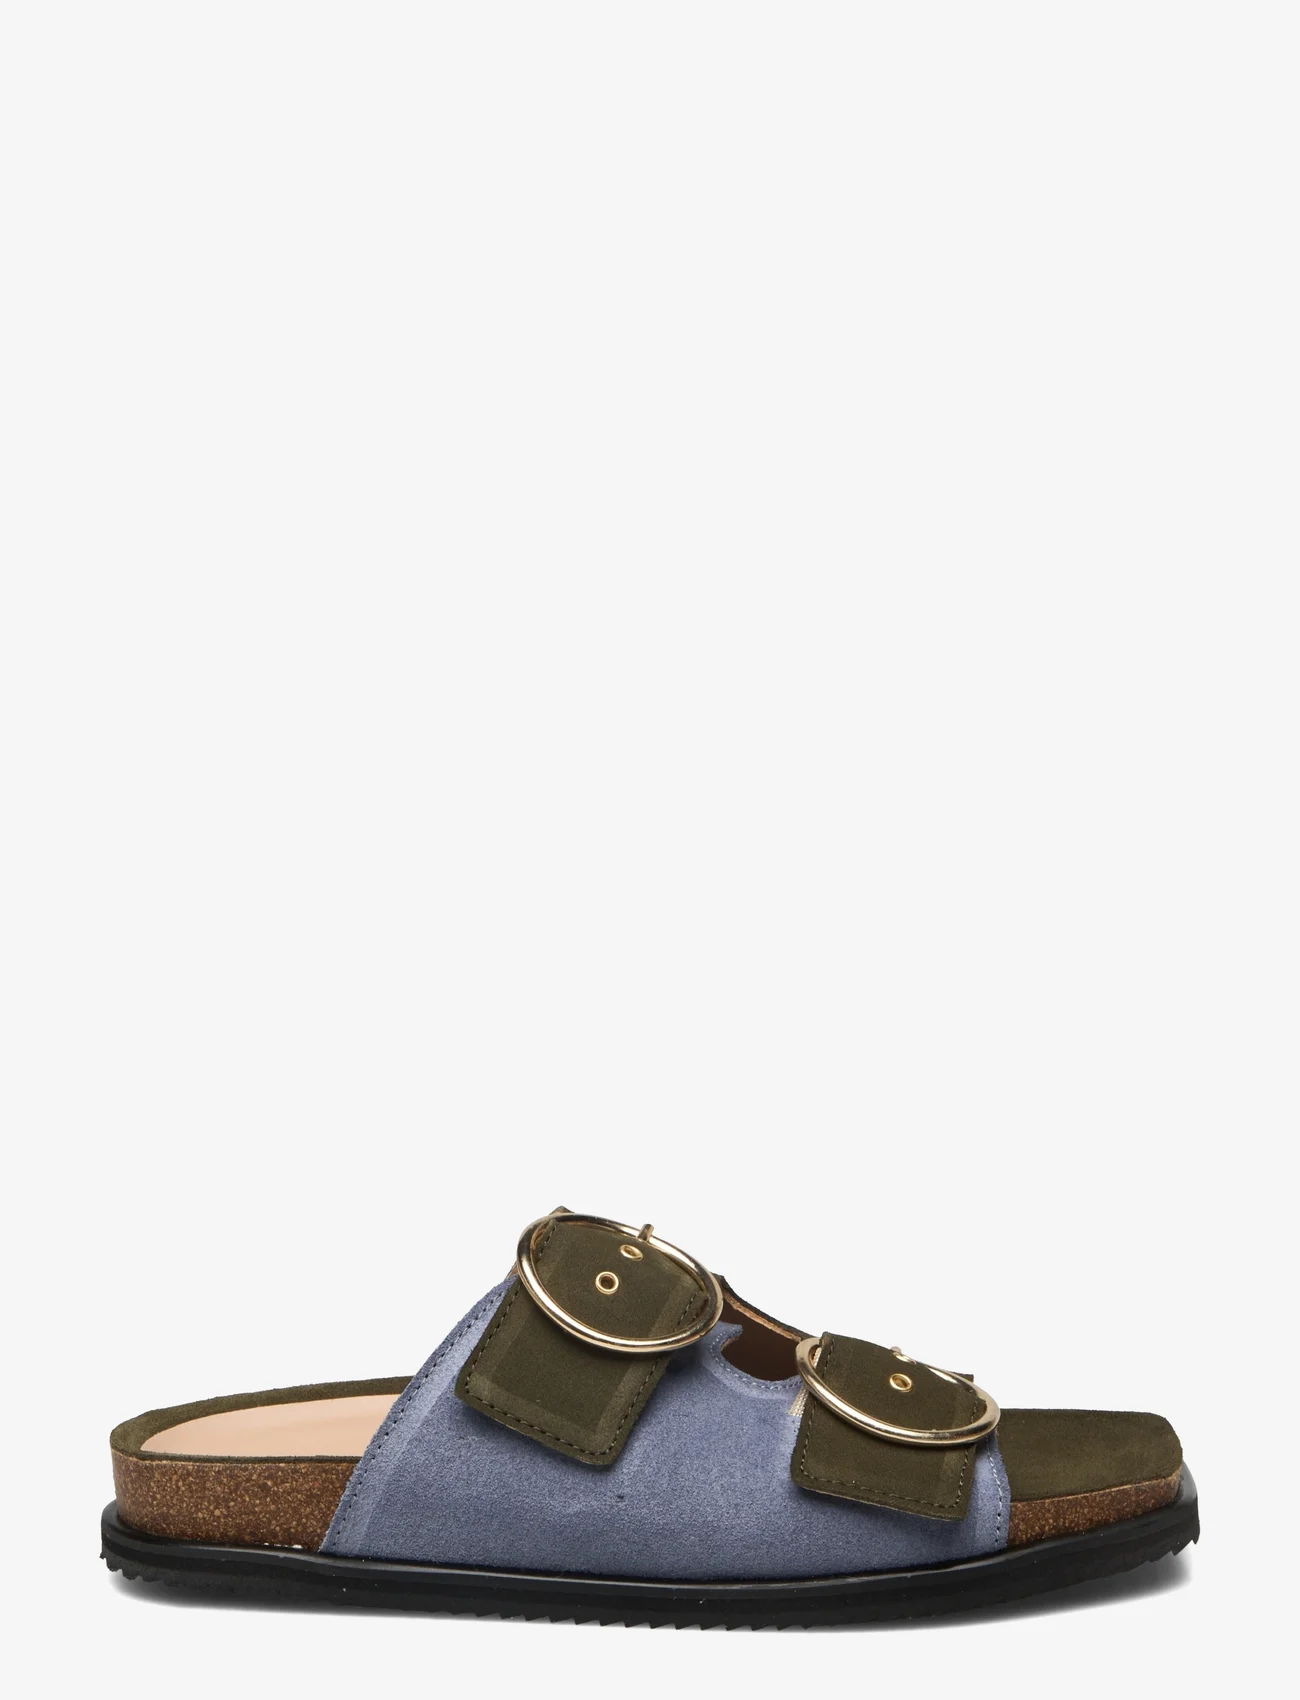 ANGULUS - Sandals - flat - open toe - op - płaskie sandały - 2244/2242 light blue/green - 1